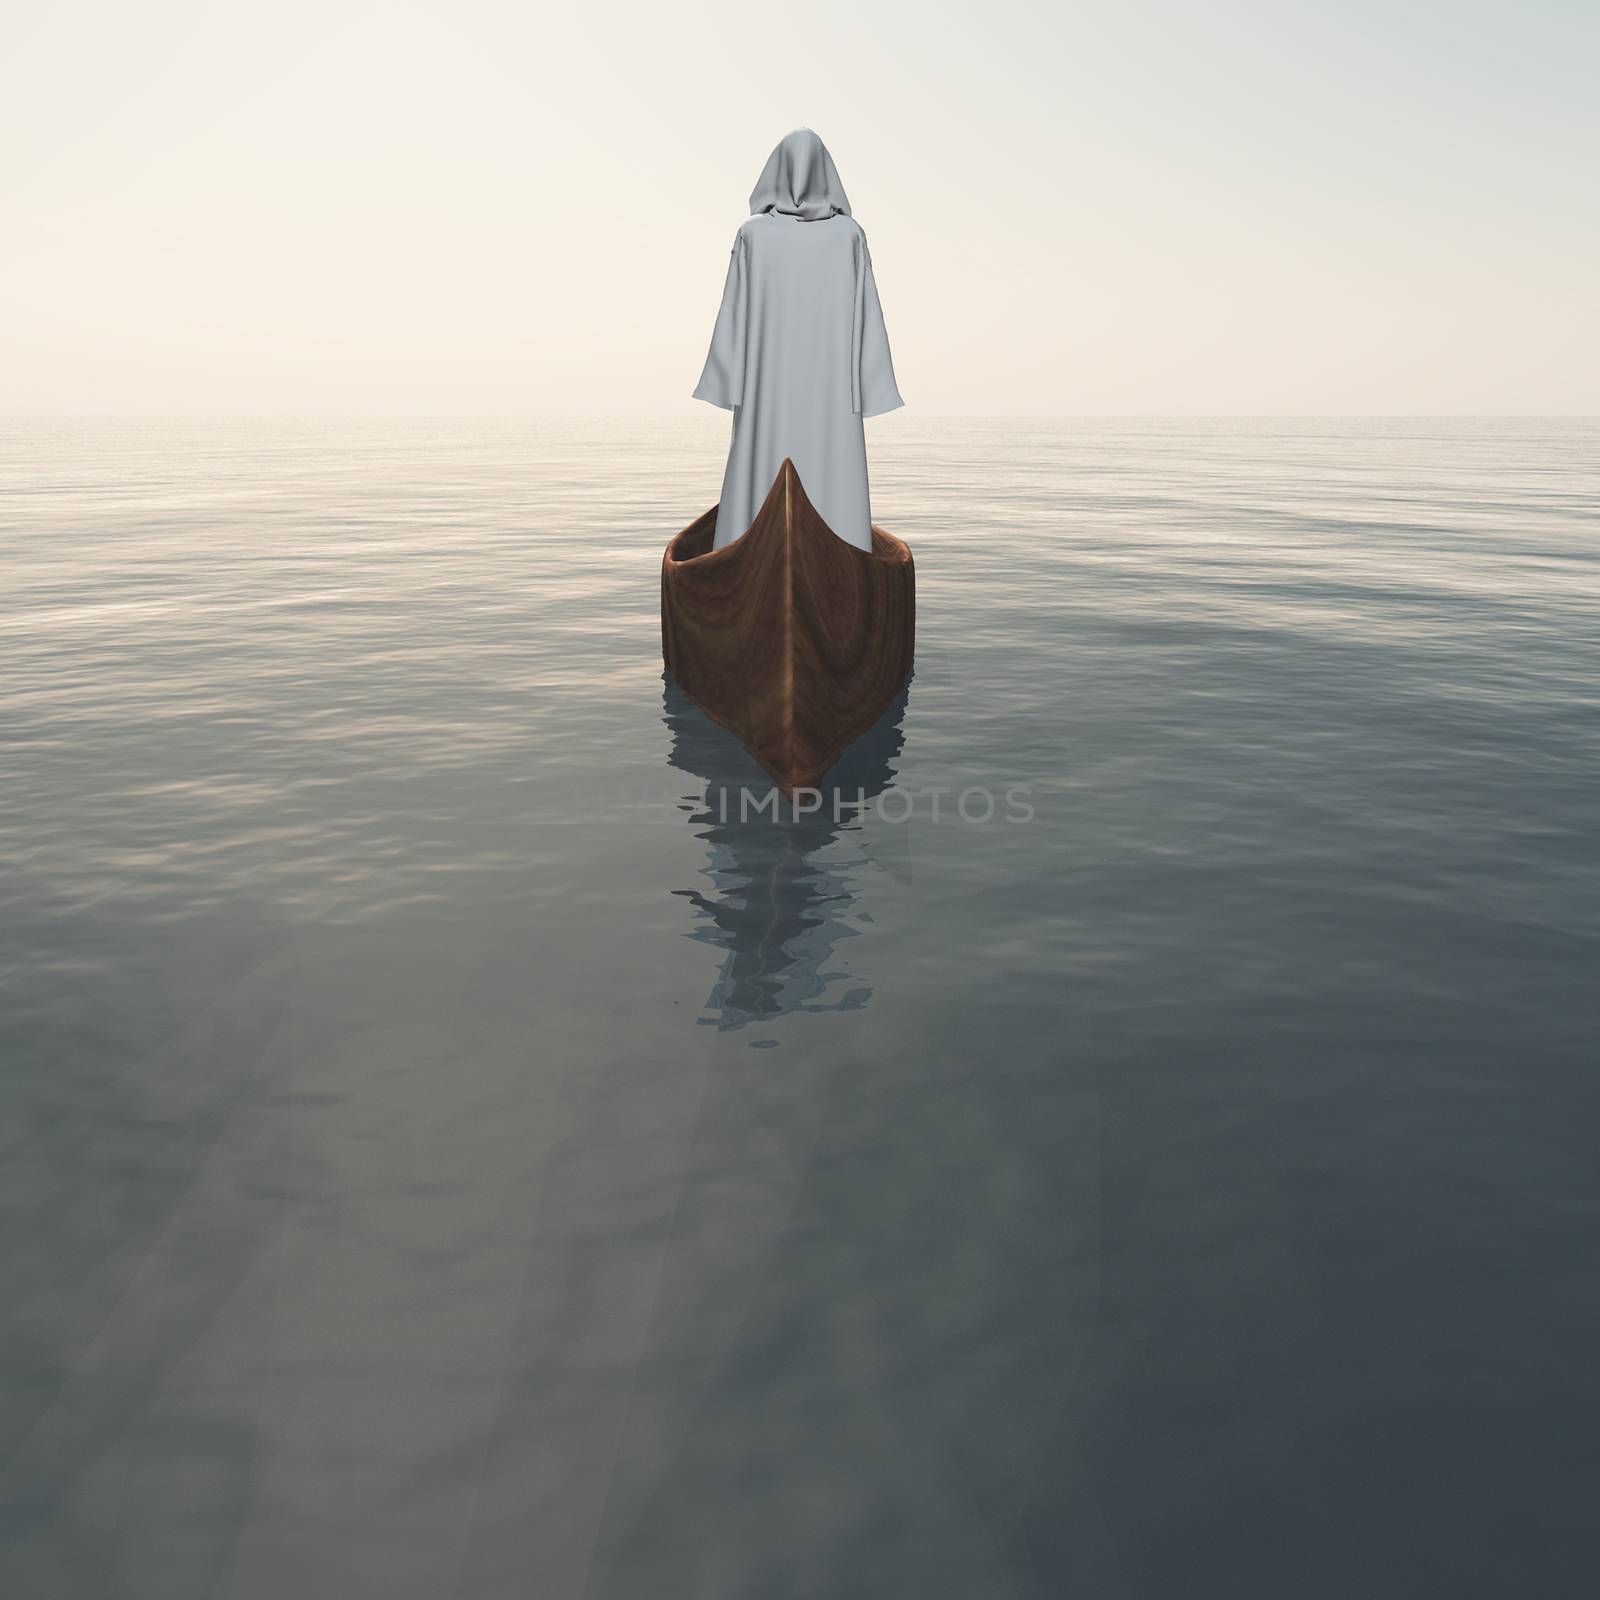 Figure in white cloak floats in the boat